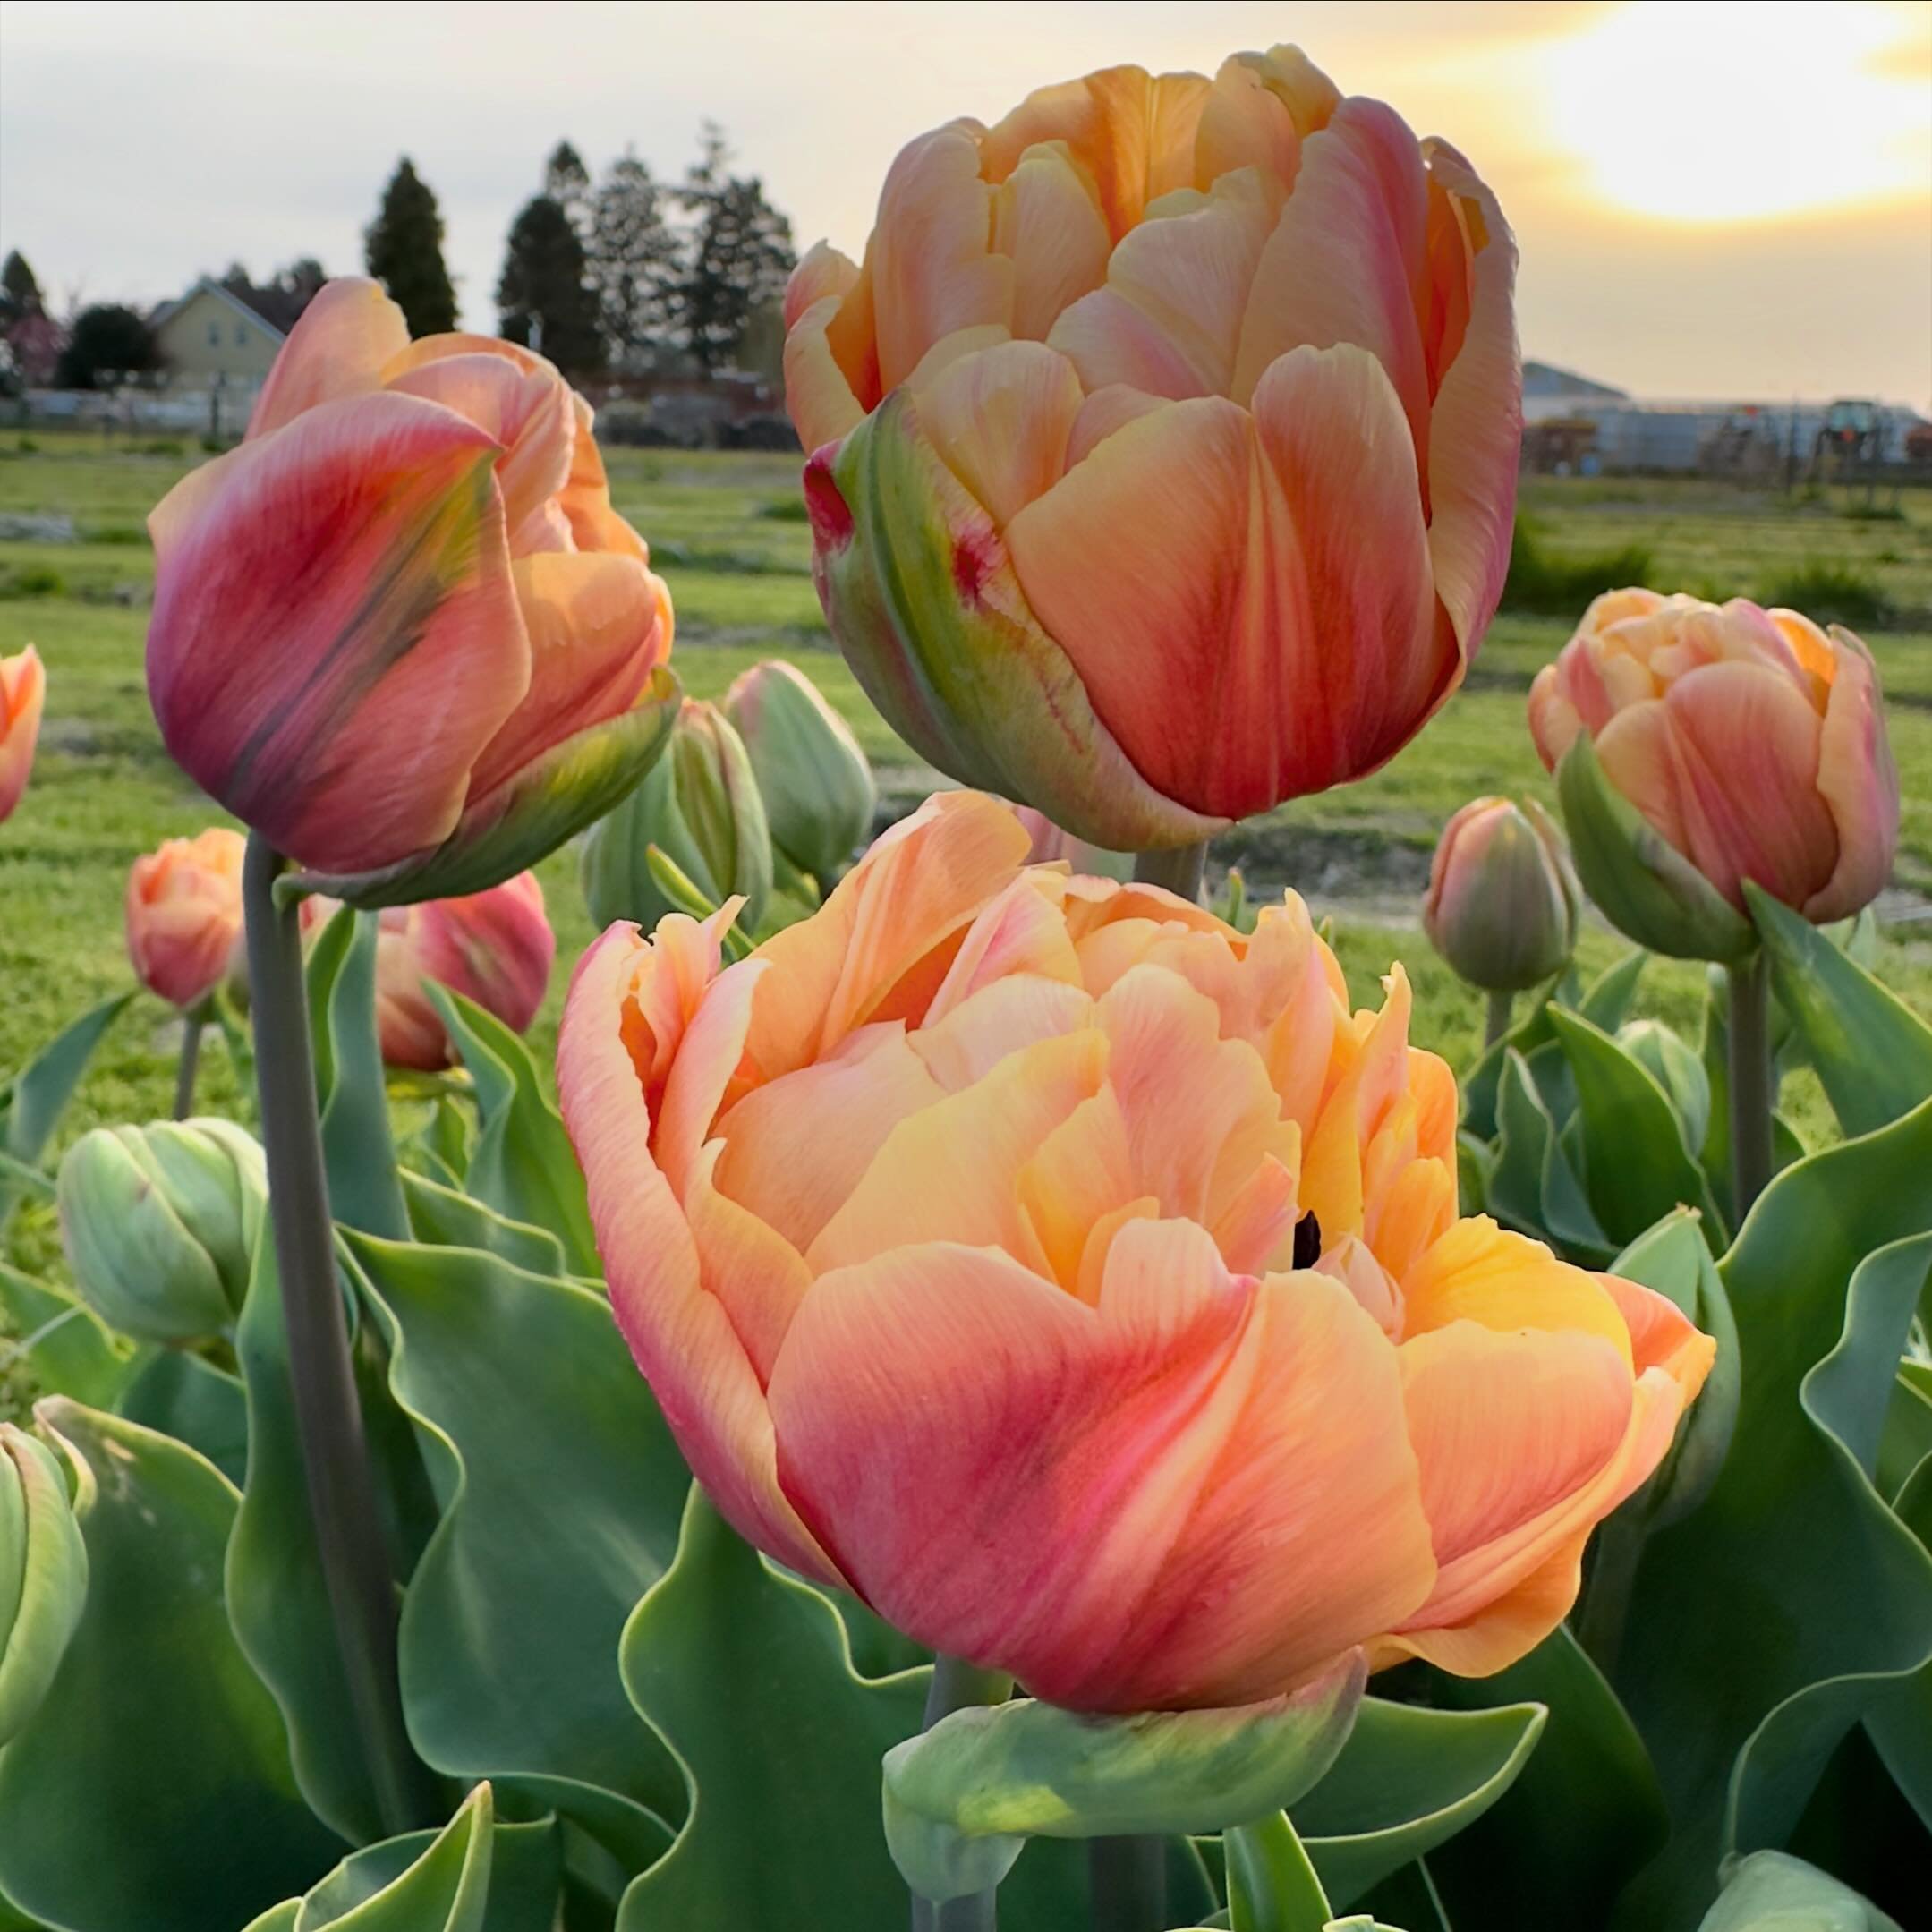 Tulip: La Belle Epoque
Like a sunset on a stem. 

#beemerryfarm #flowers #flowerfarm #tulips #tulipseason #peony #doubletulip #sunset #spring #springflowers #sunsetvibes